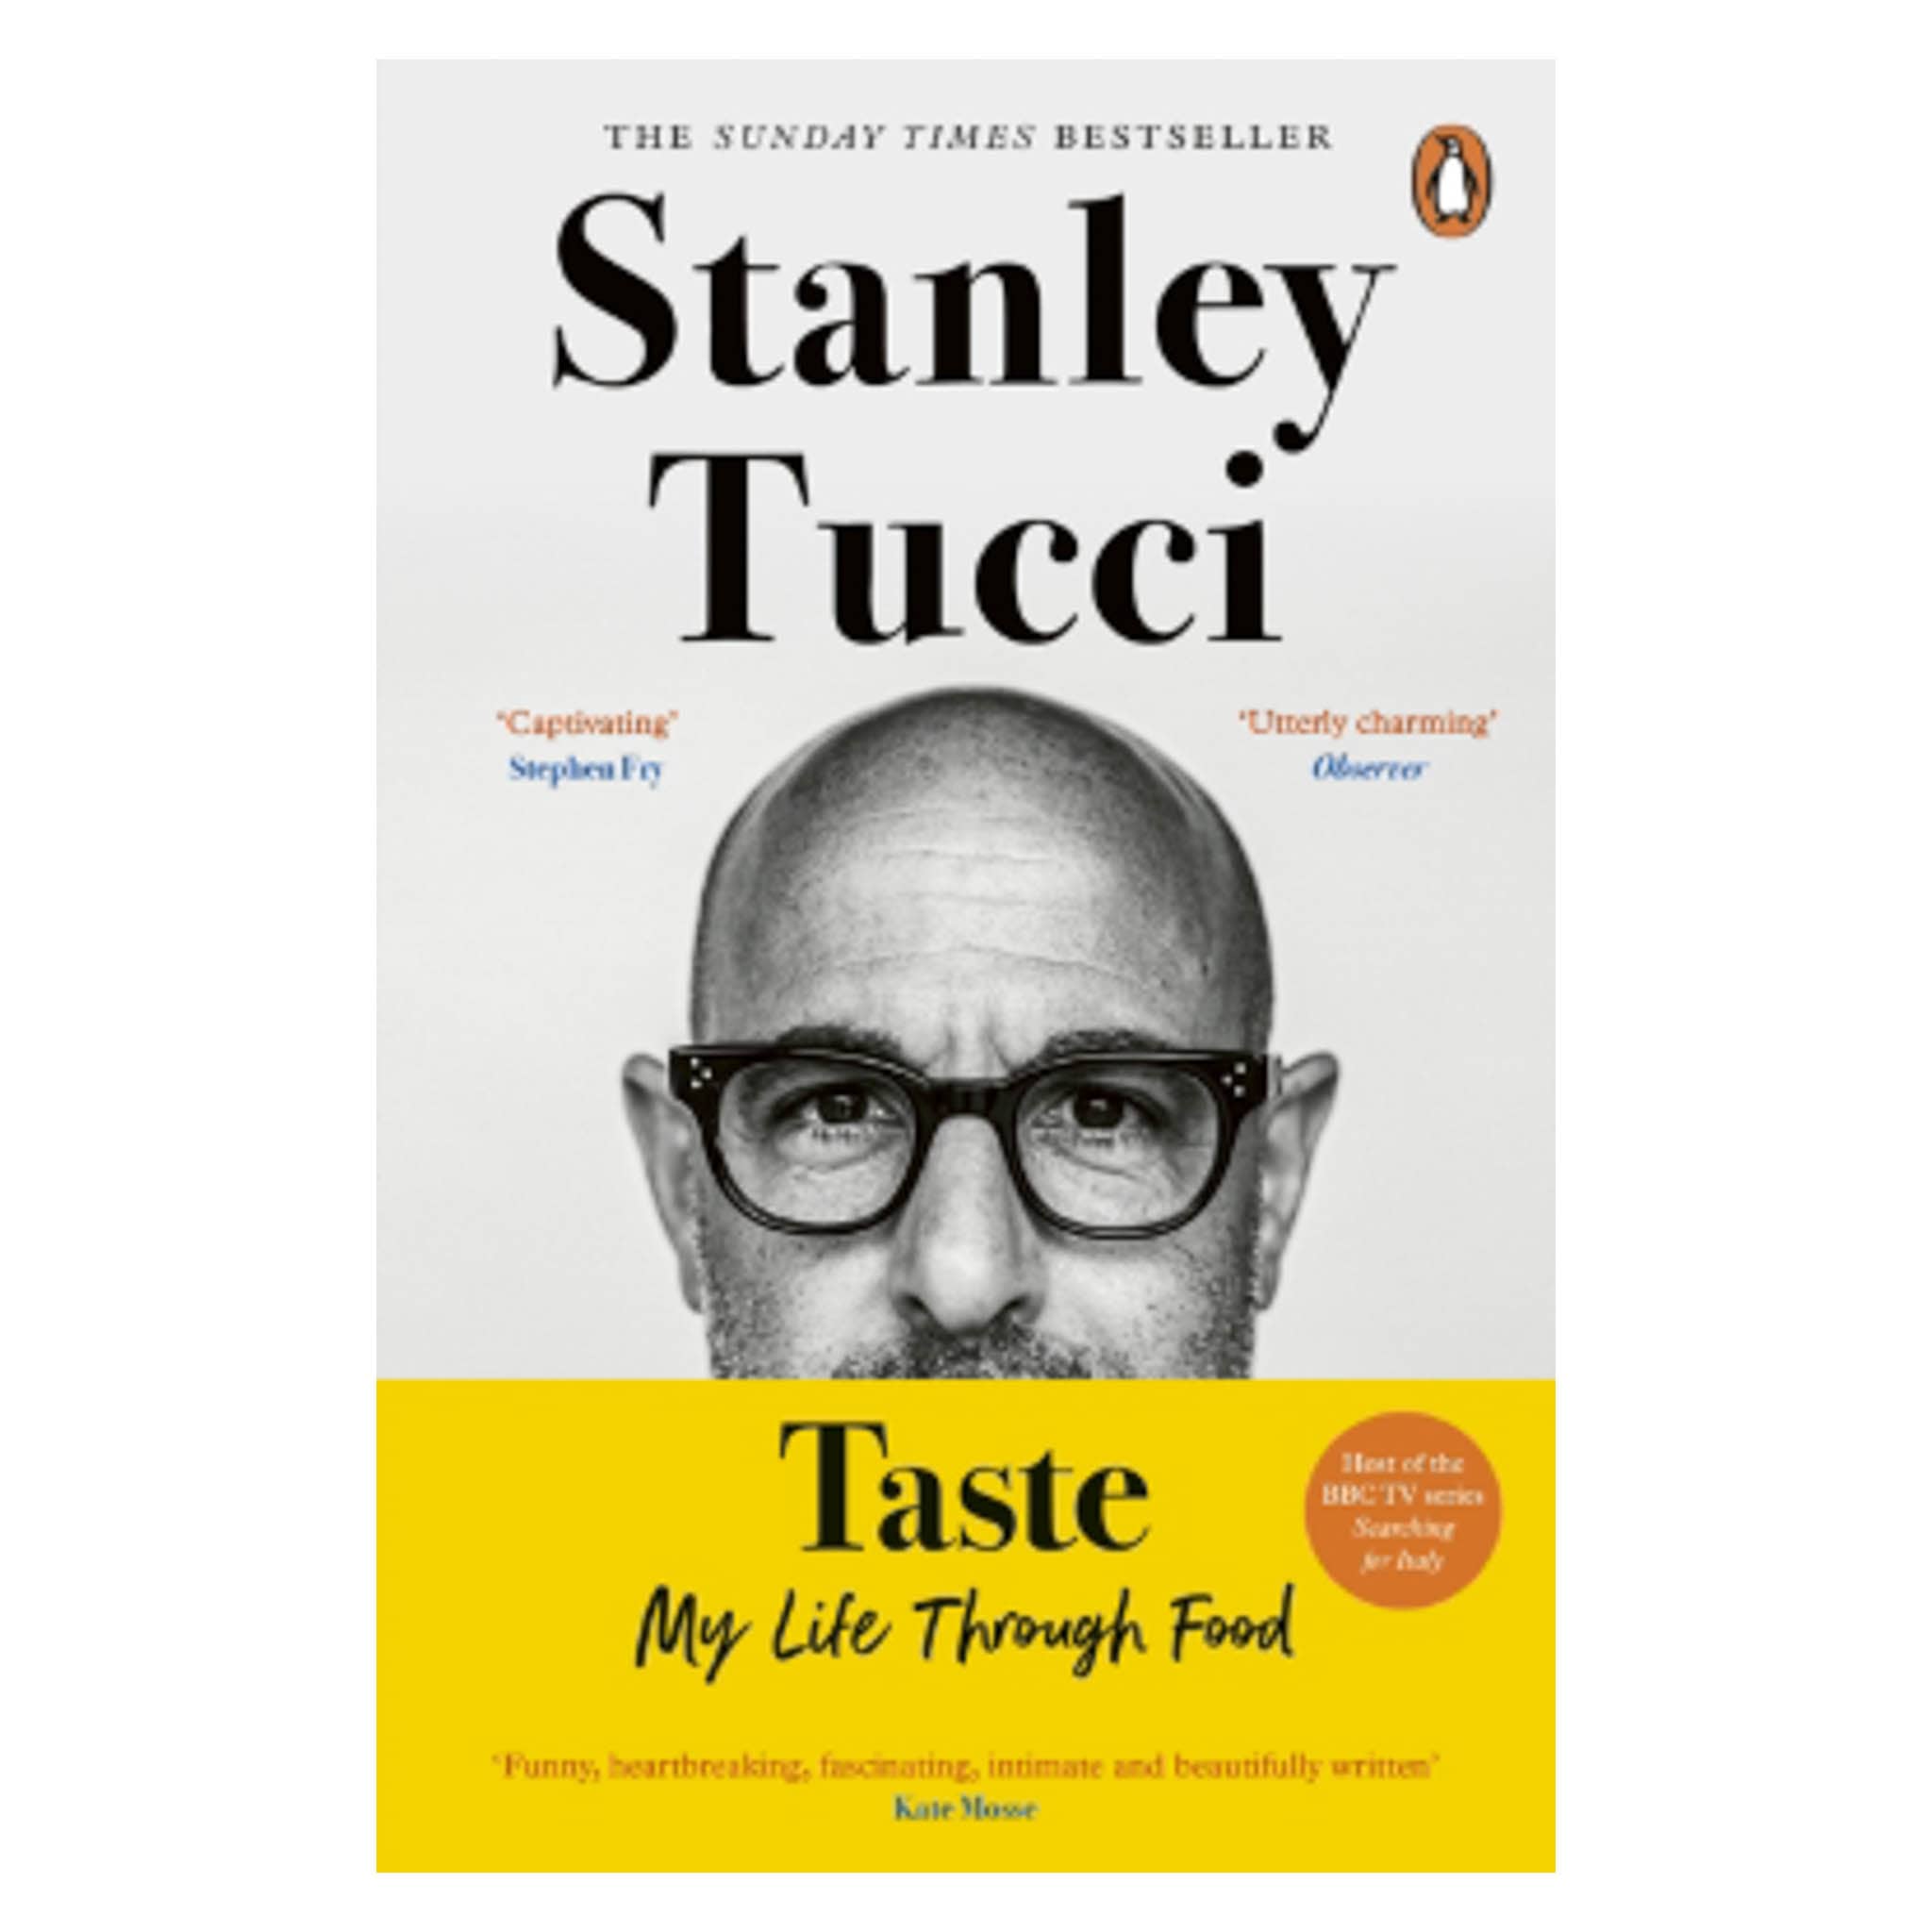 Taste, by Stanley Tucci